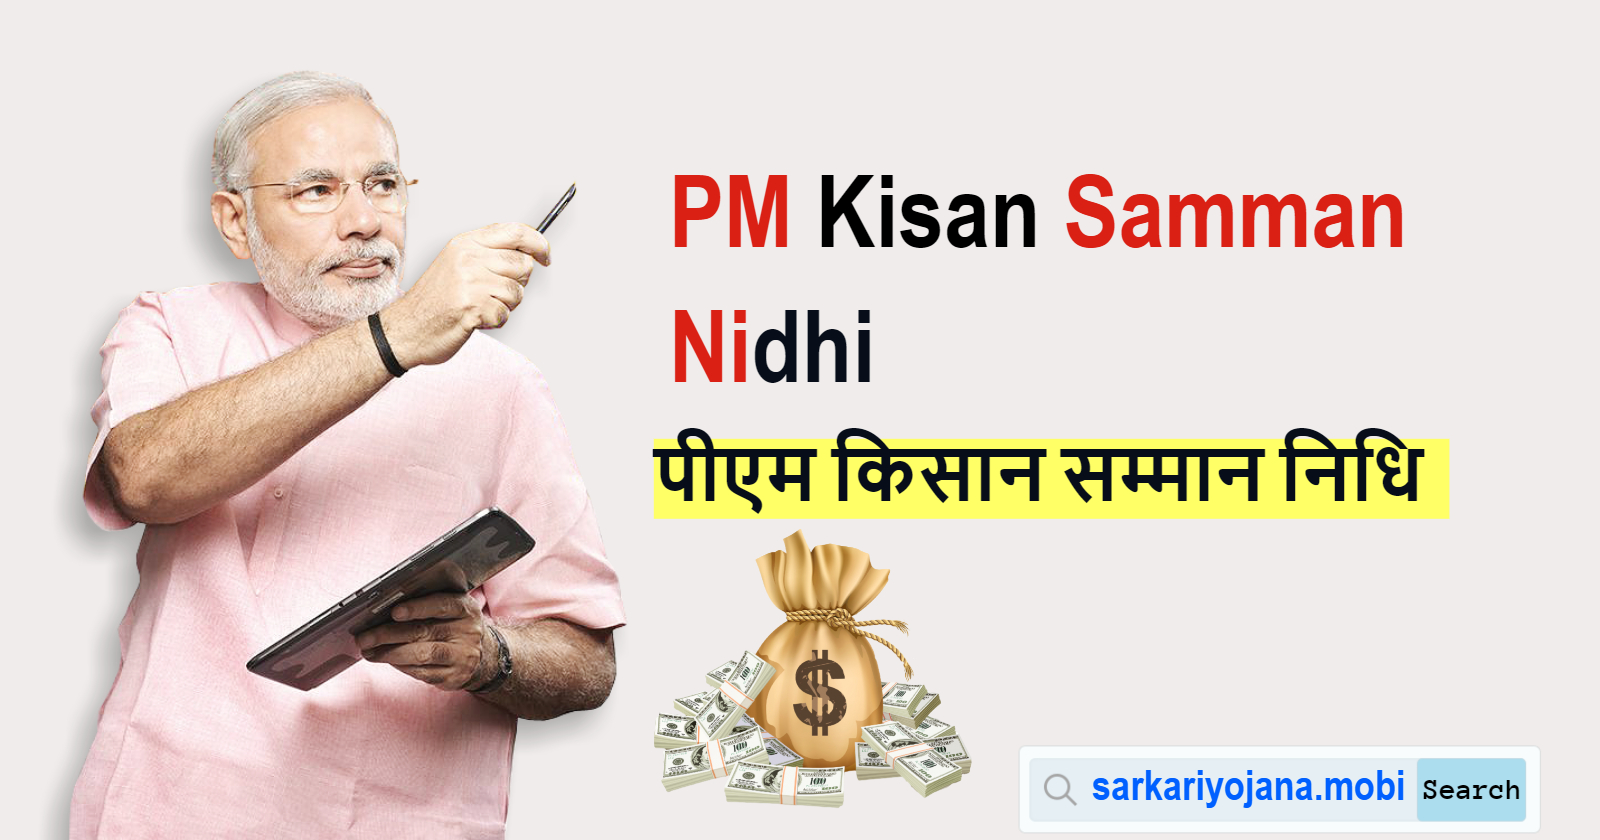 PM-Kisan Samman Nidhi